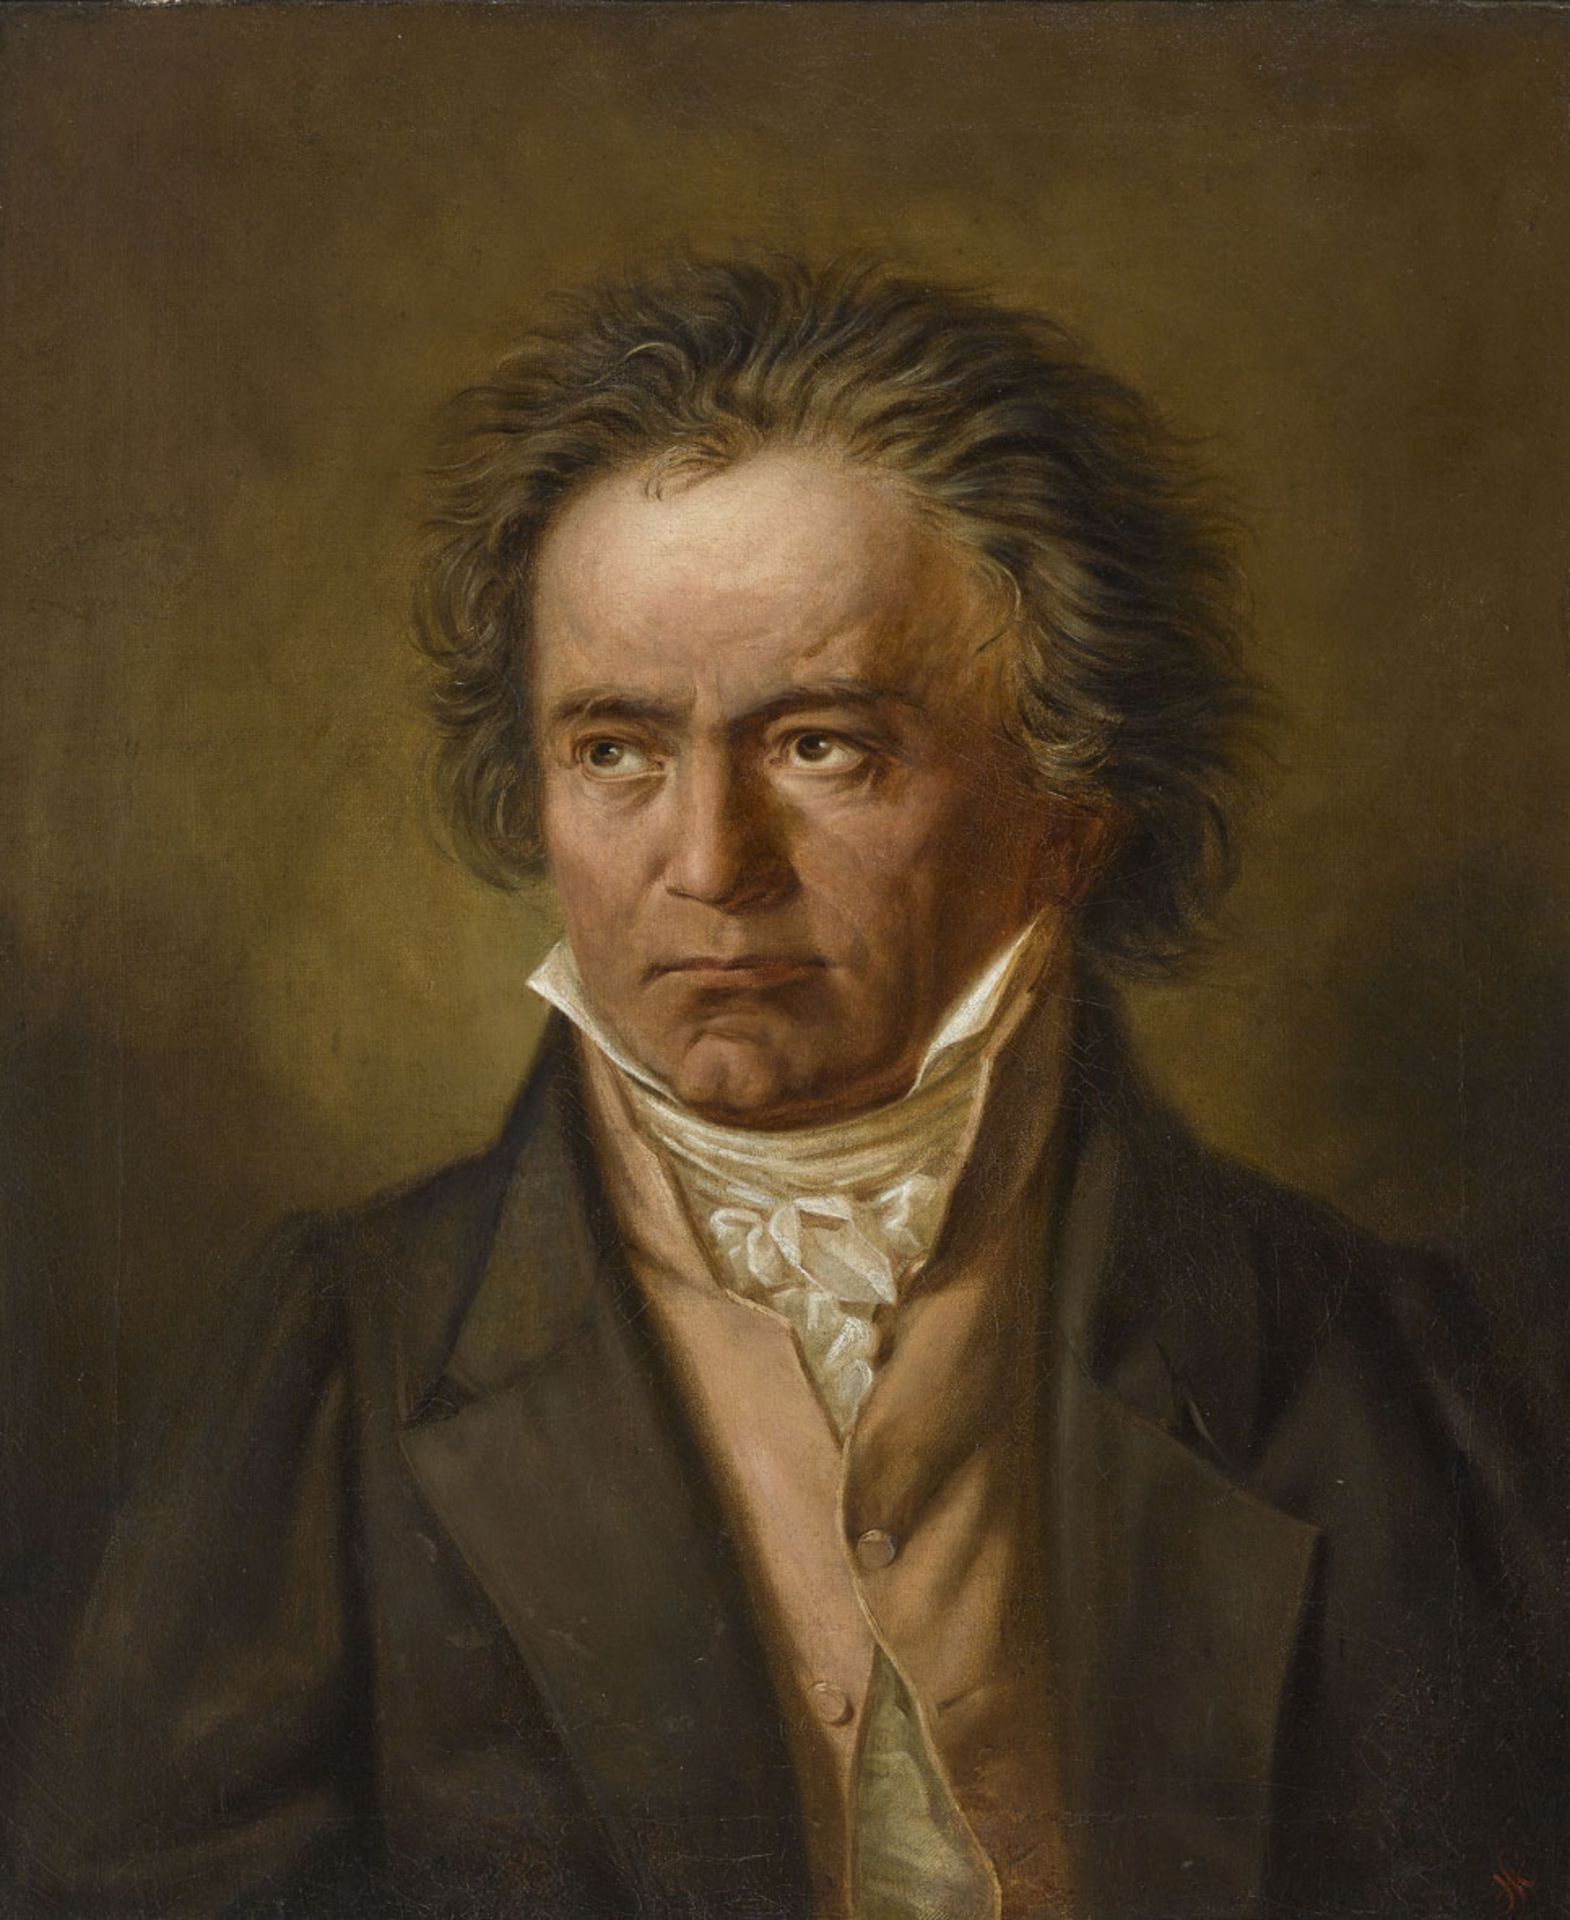 Monogrammist HS19. Jh.Ludwig van Beethoven(1770-1827). Brustbild nahezu frontal, den Kopf nach links